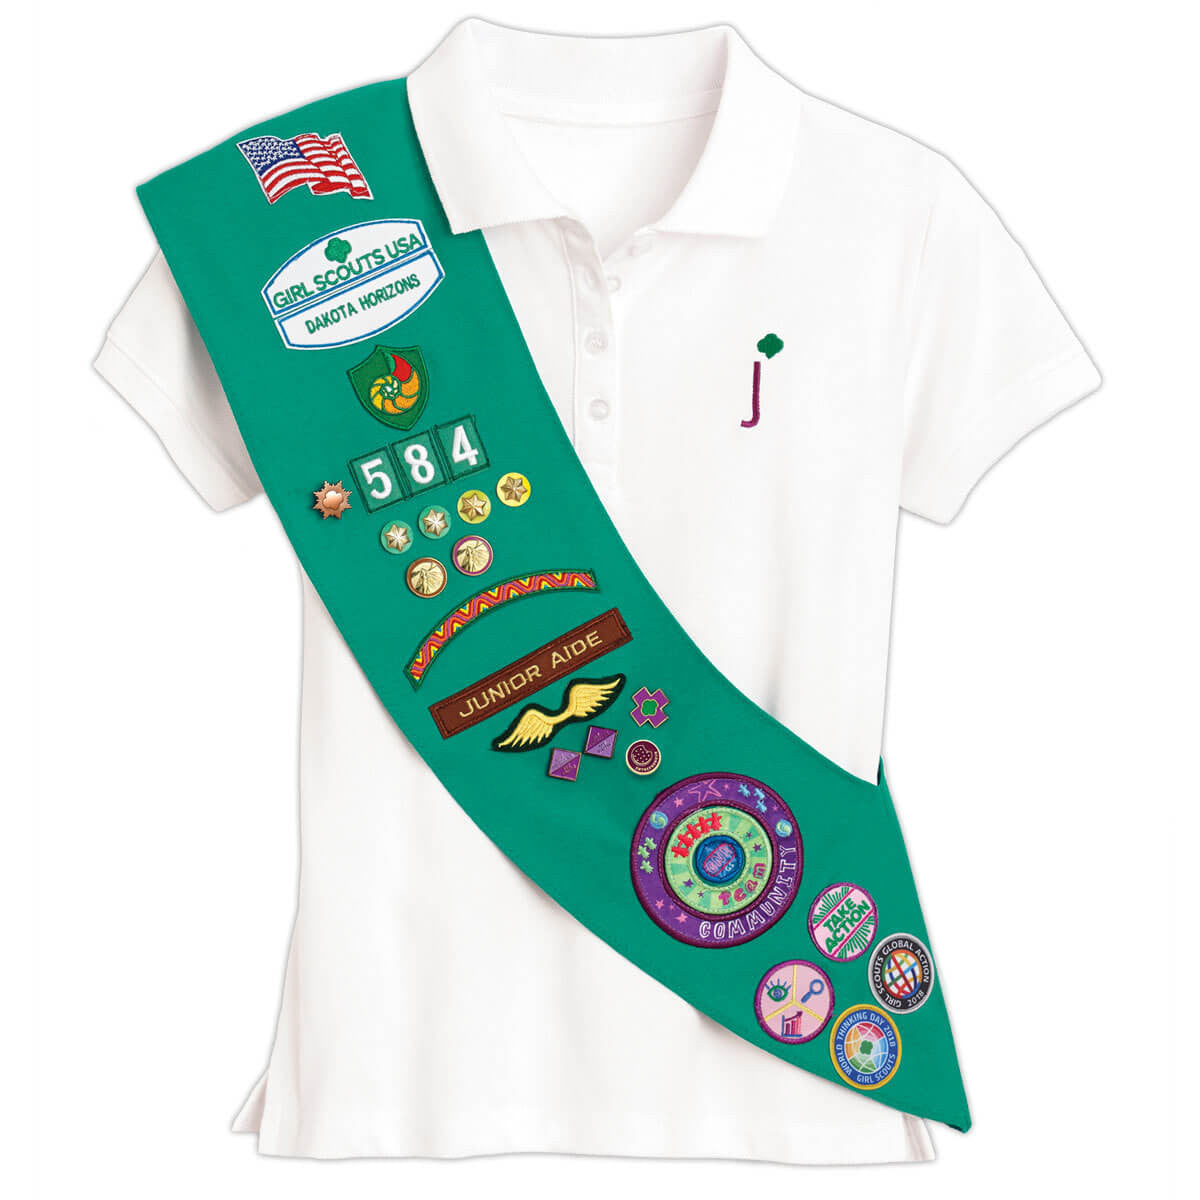 Girl Scouts Junior Sash - Basics Clothing Store